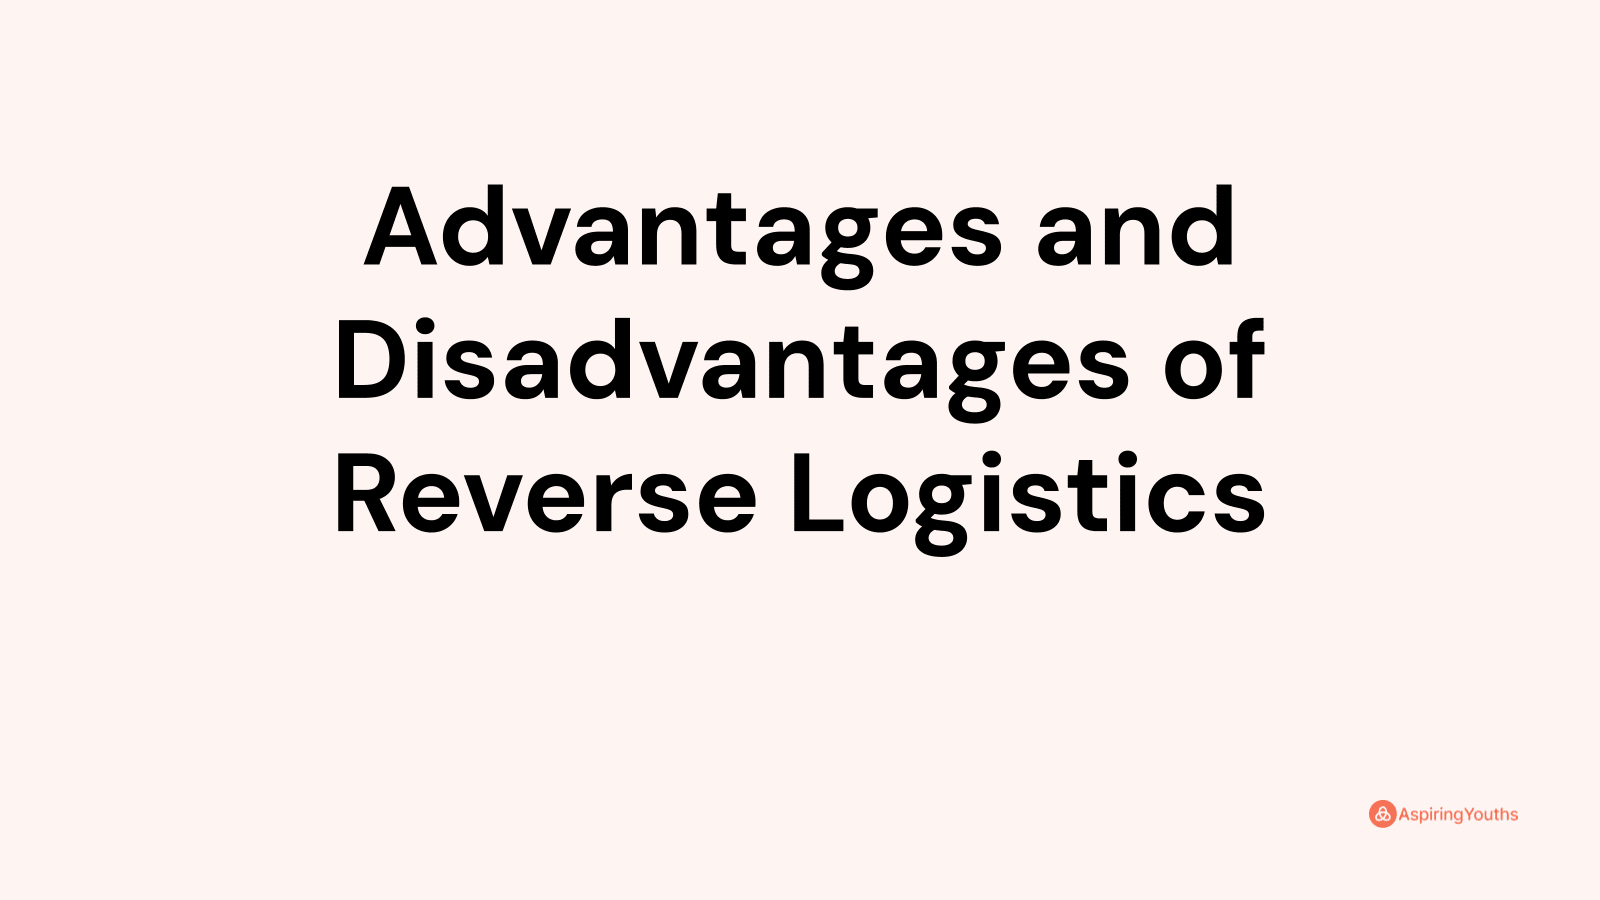 Advantages and disadvantages of Reverse Logistics